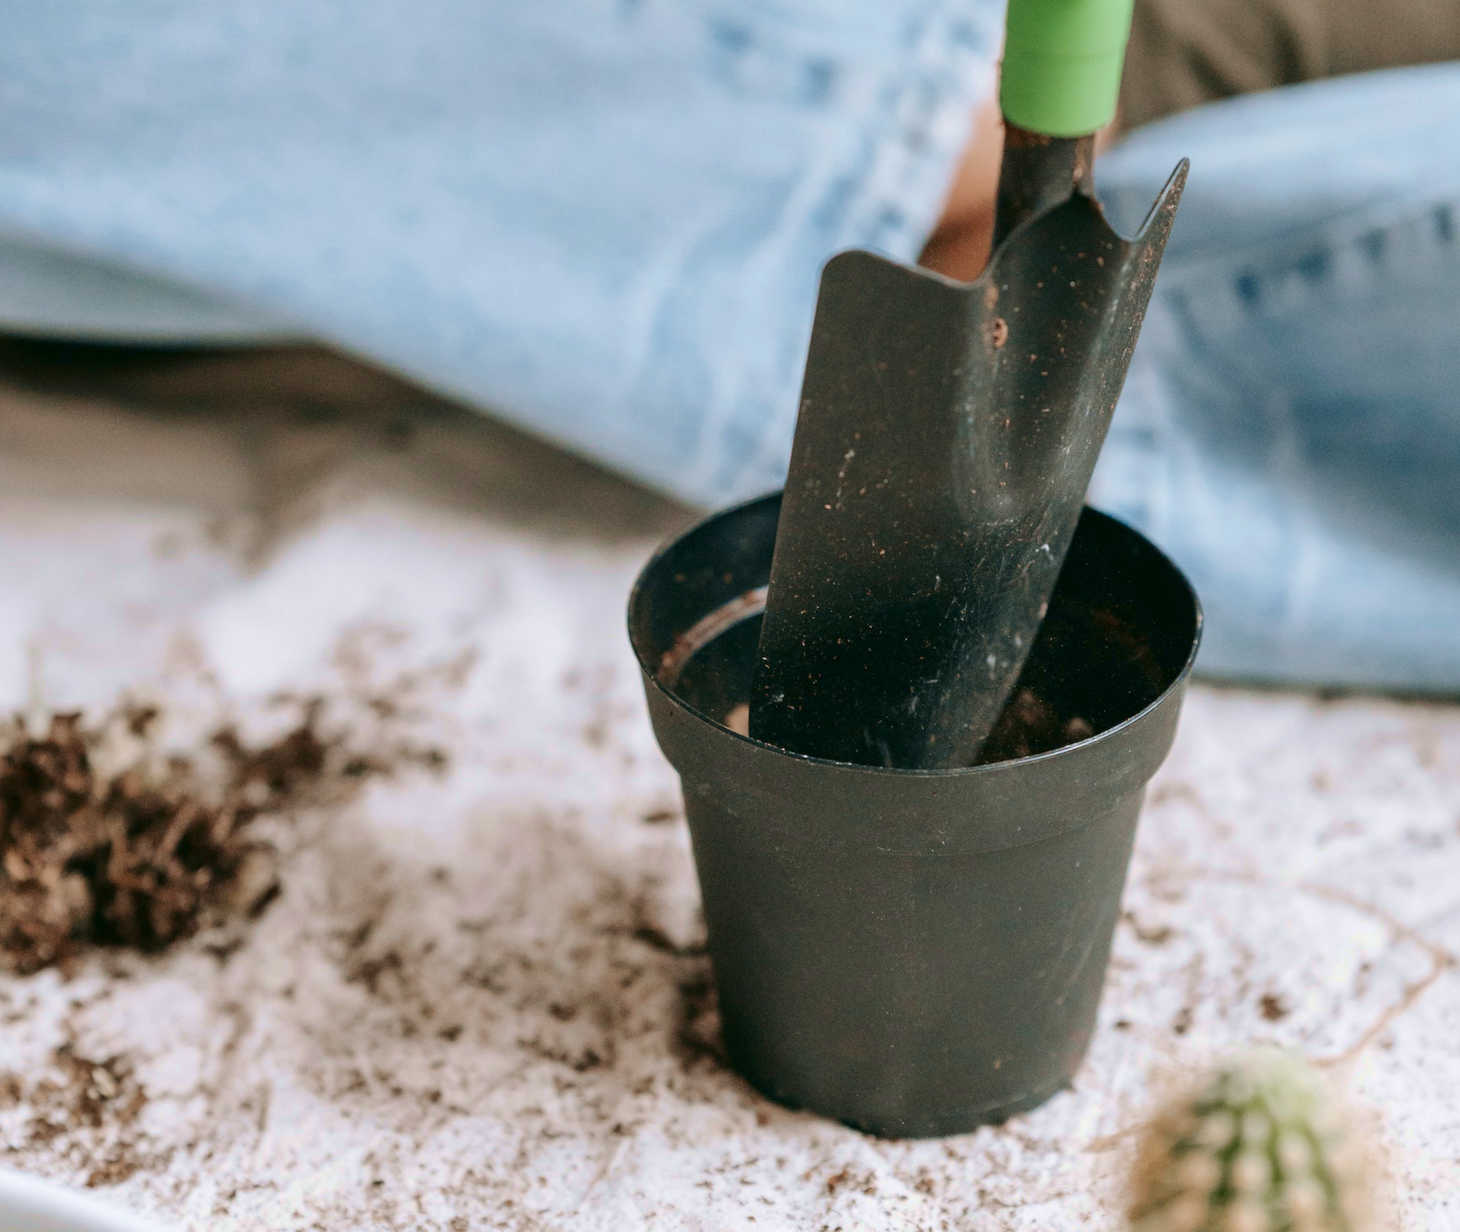 gardening shovel in a small pot